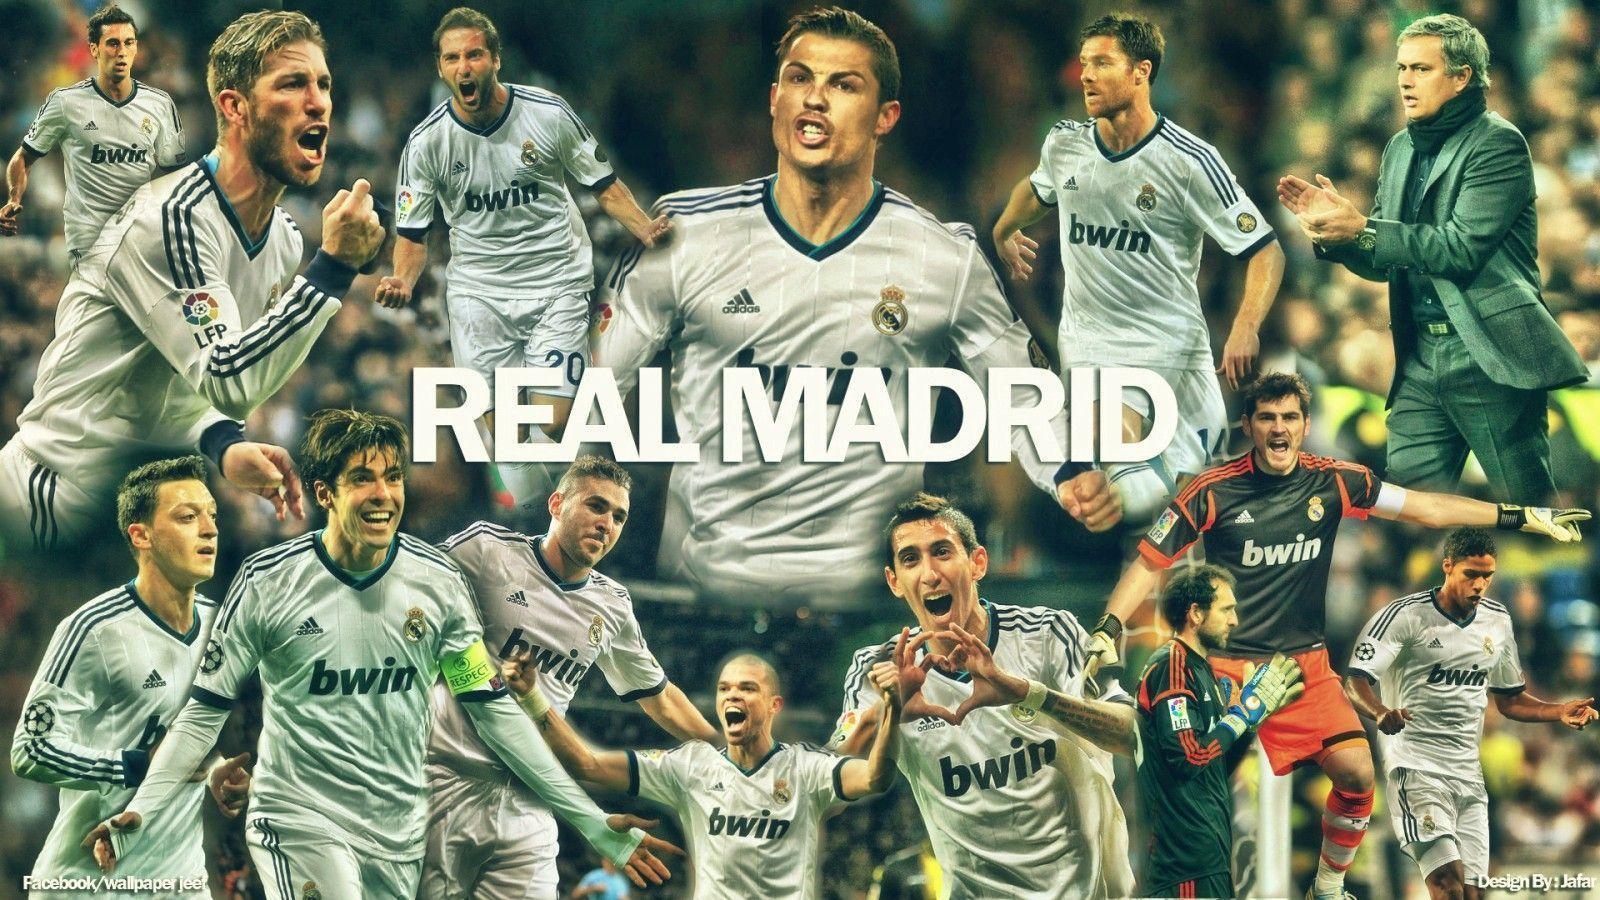 Real Madrid Wallpaper Full HD 2015